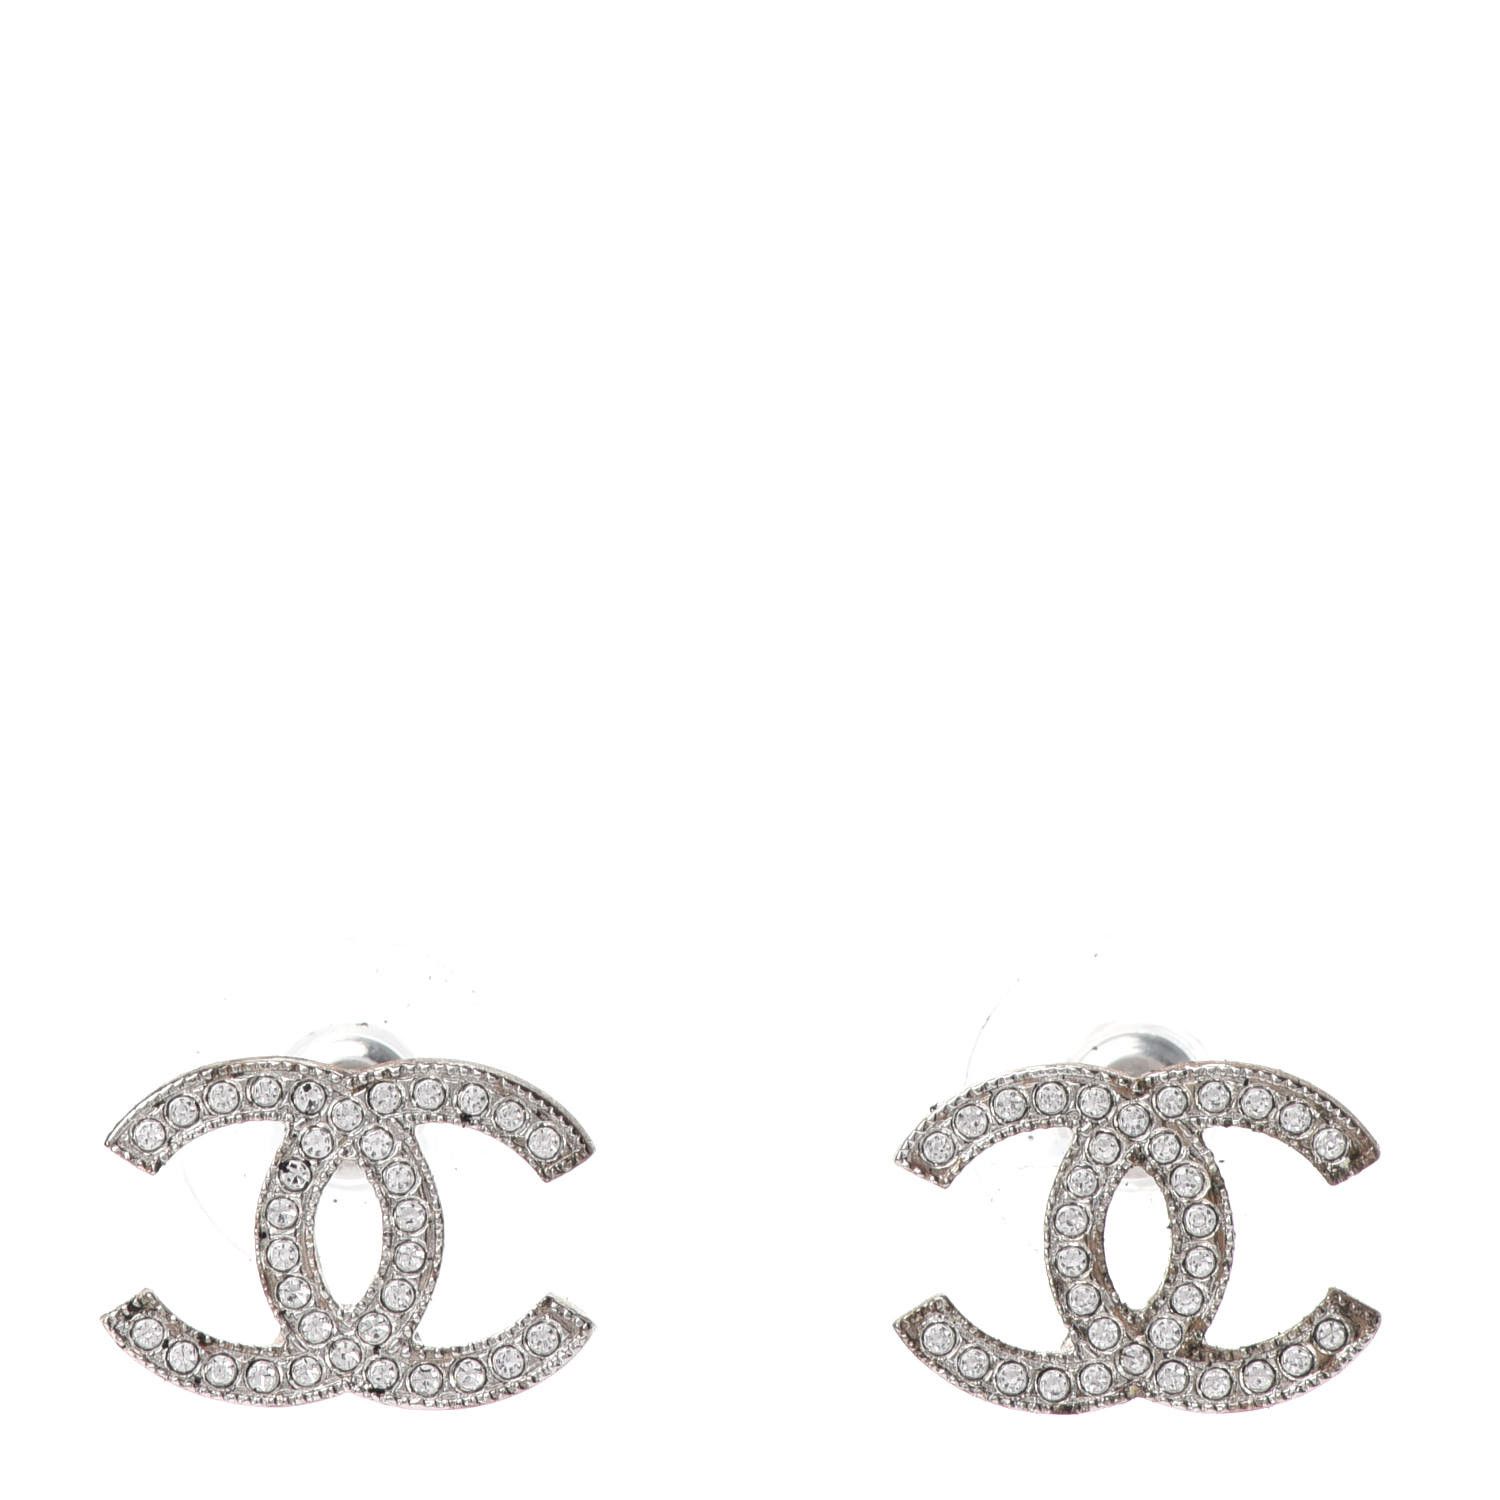 Crystal CC Earrings Silver | Fashionphile